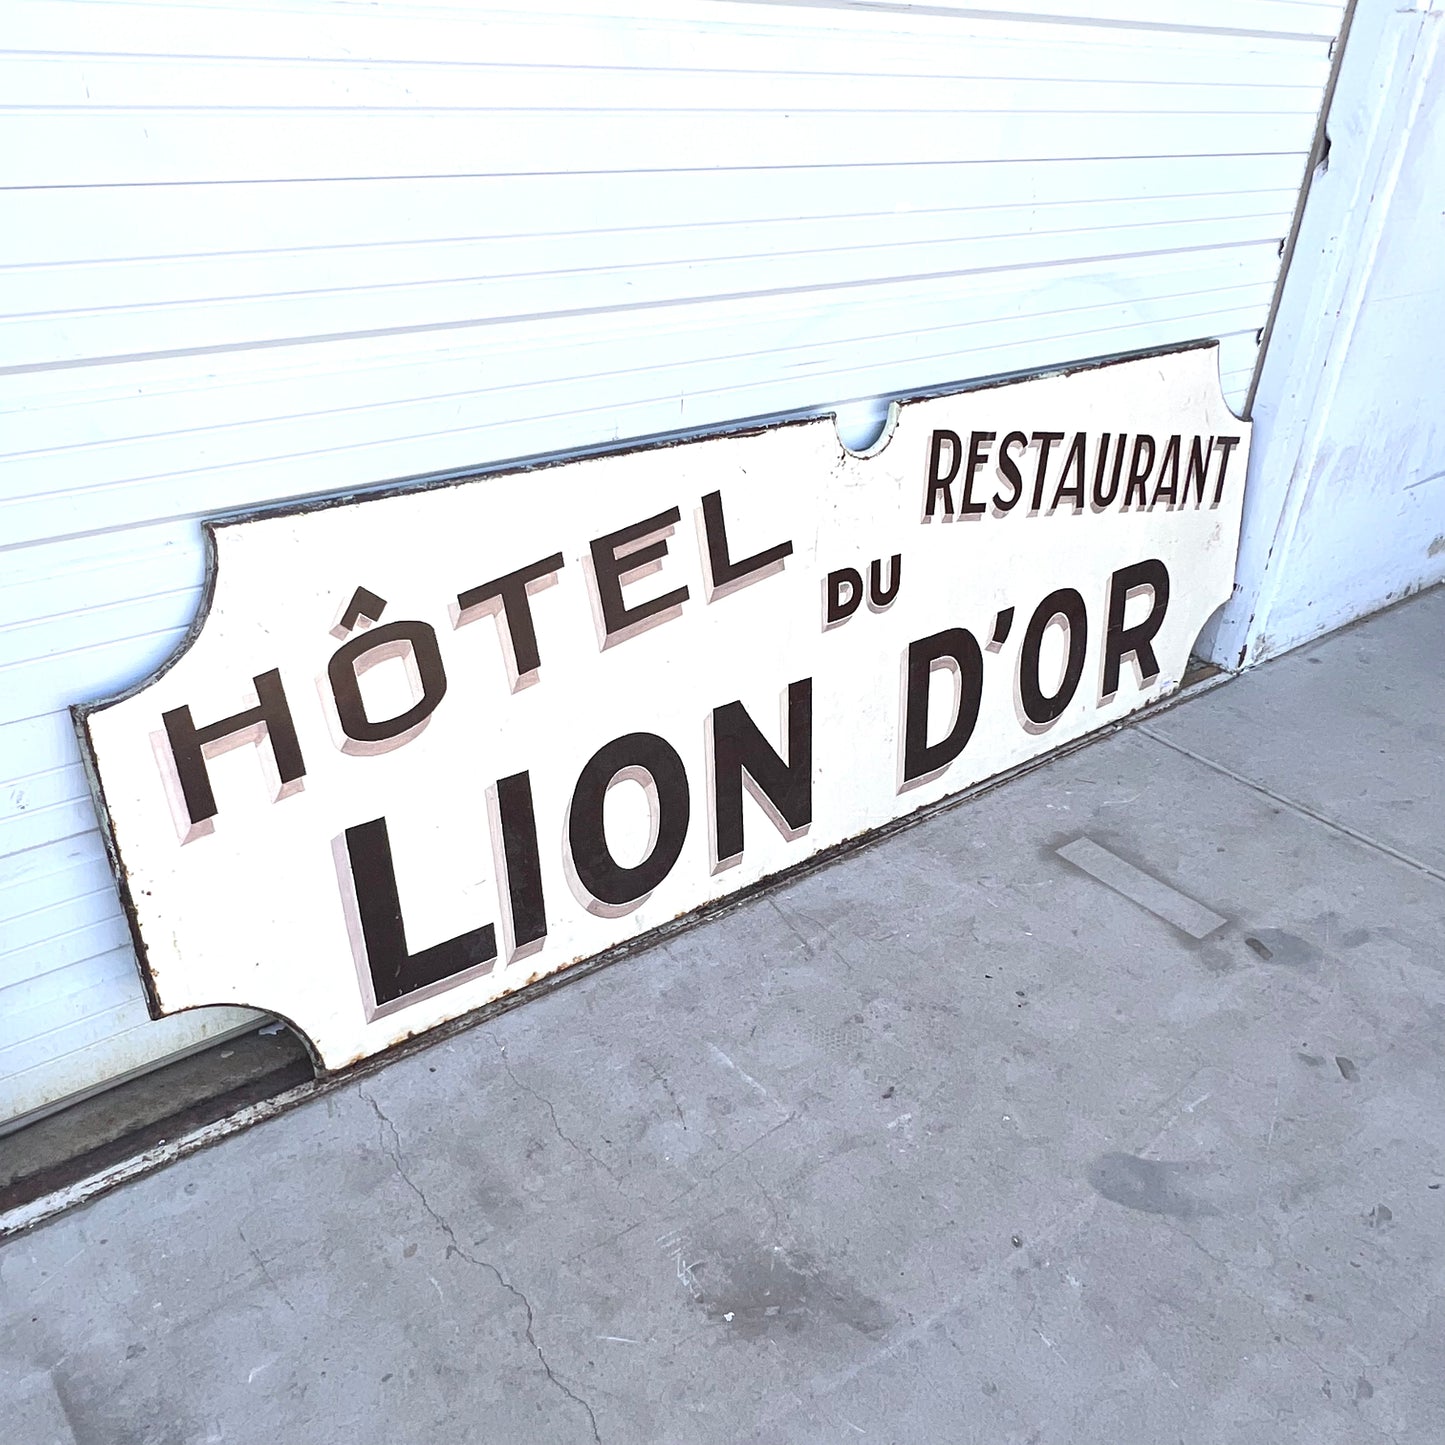 Hotel Restaurant du Lion D'Or Double-Sided Sign